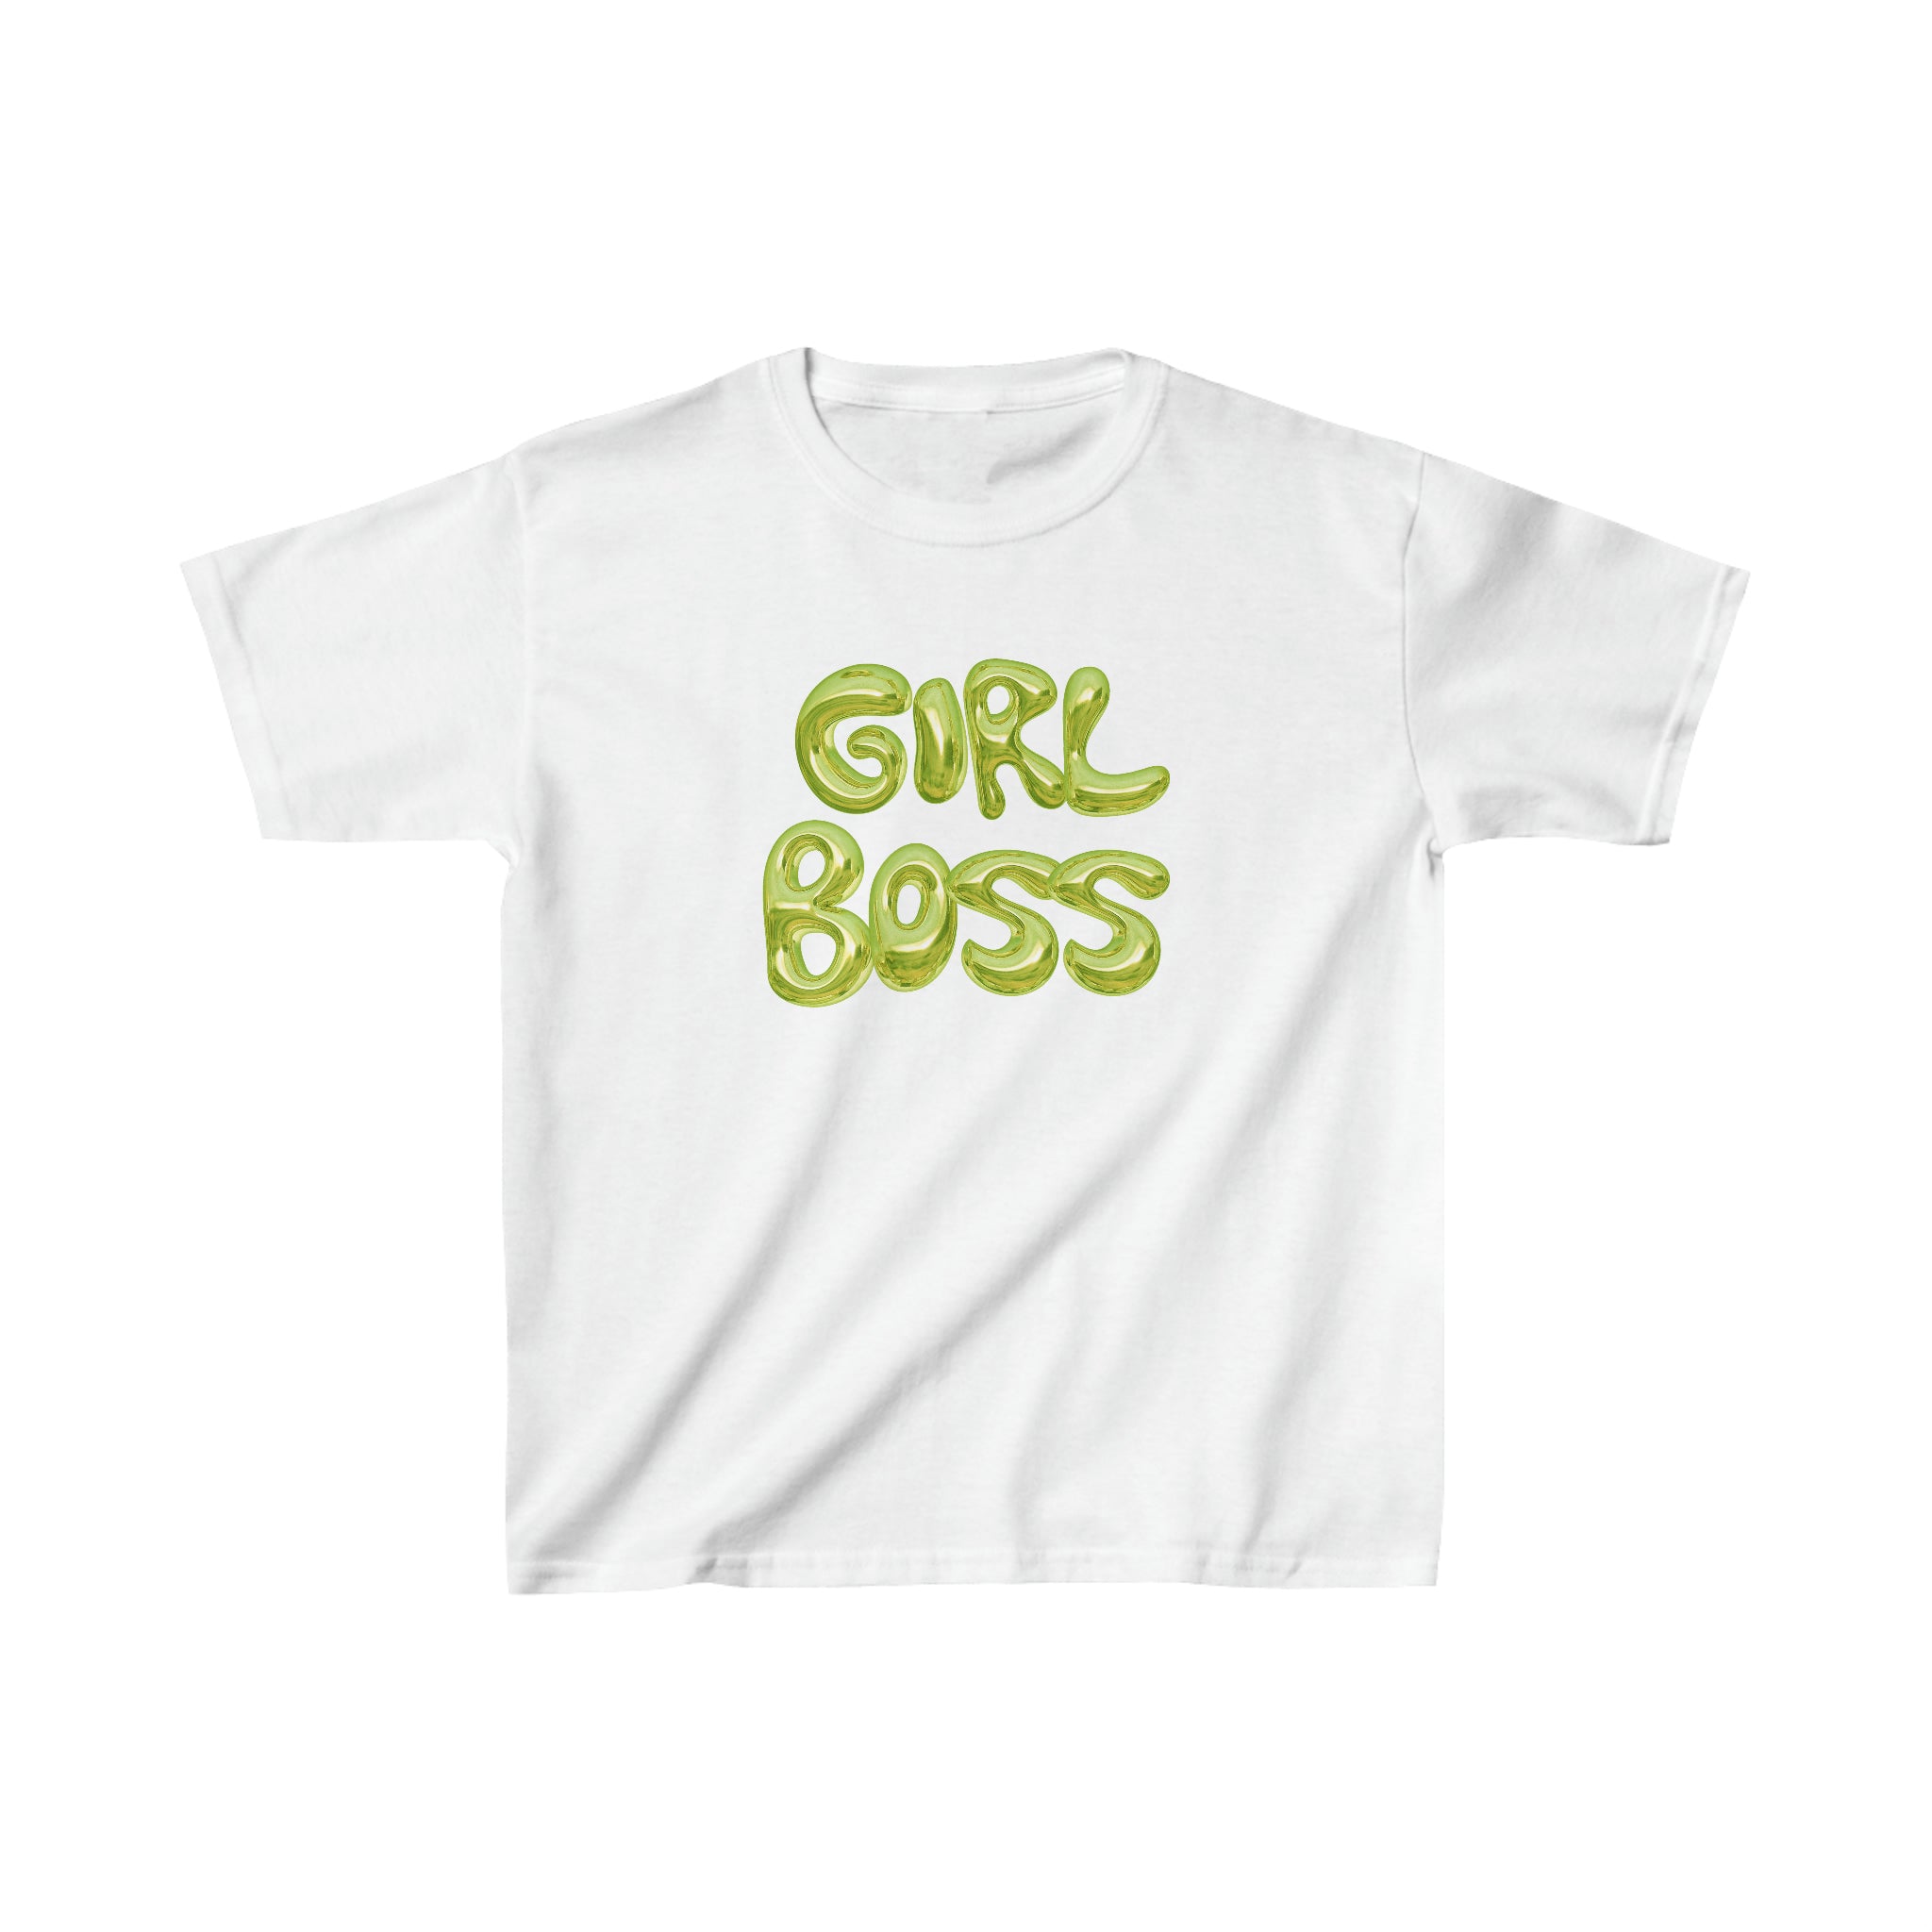 'GIRL BOSS' baby tee - In Print We Trust